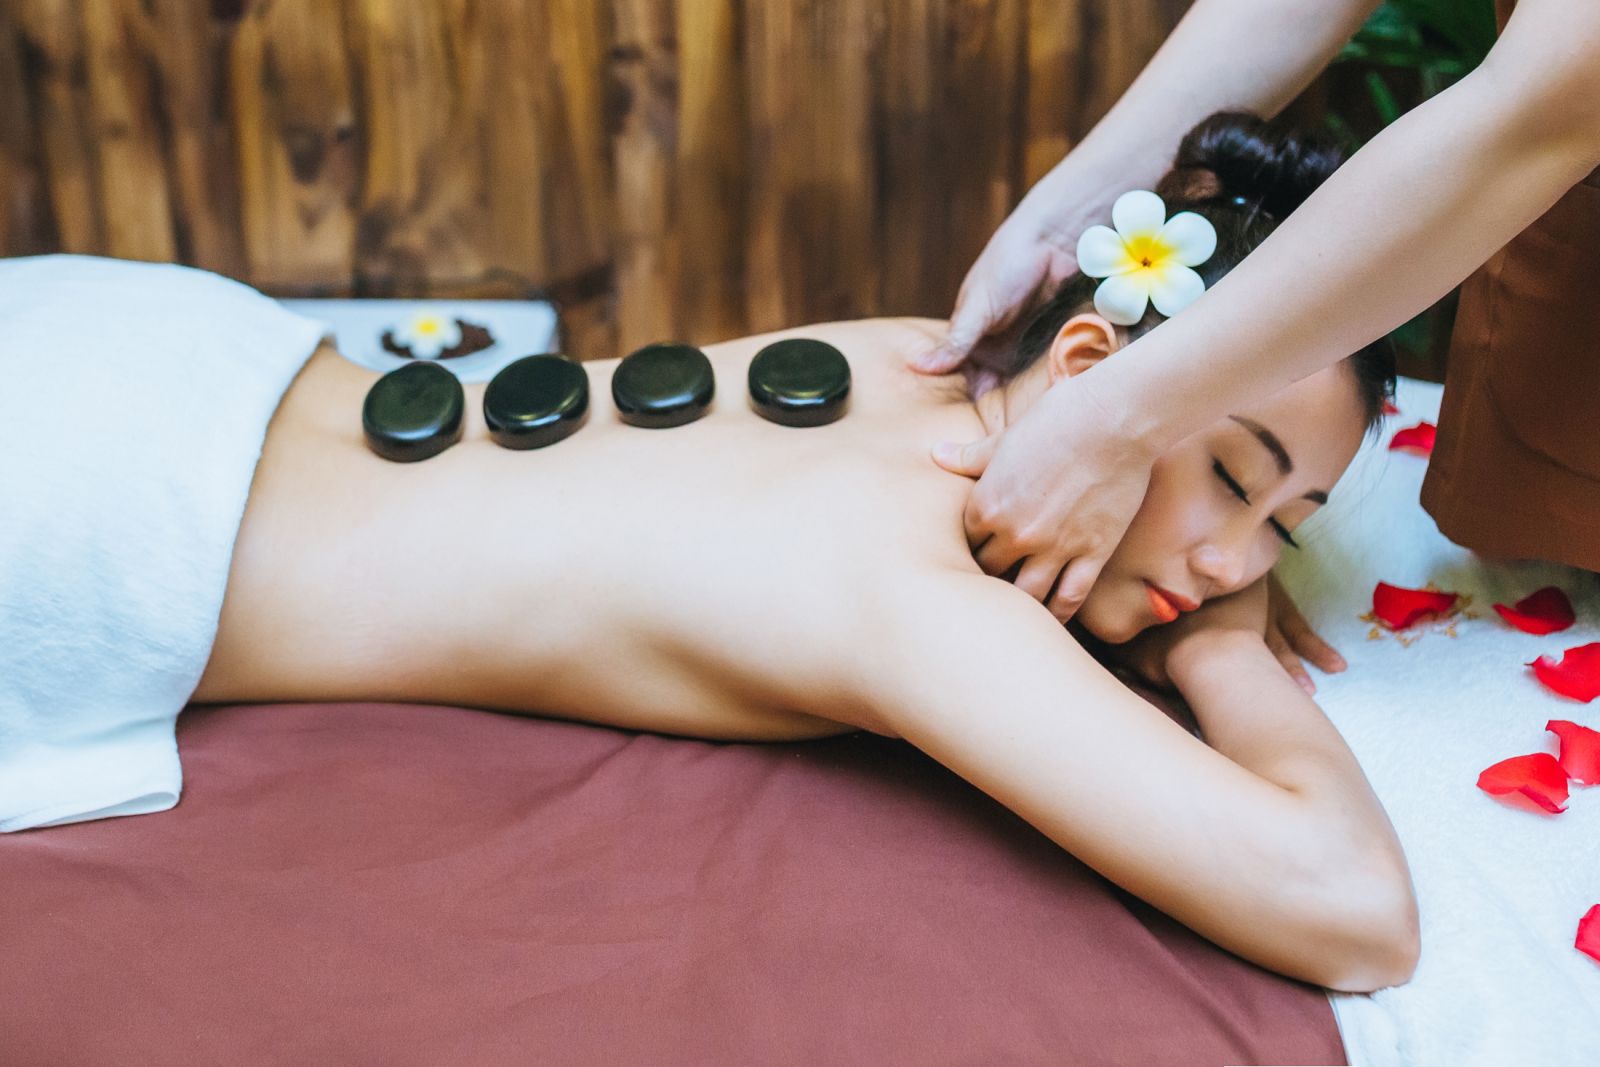 massage body đá nóng